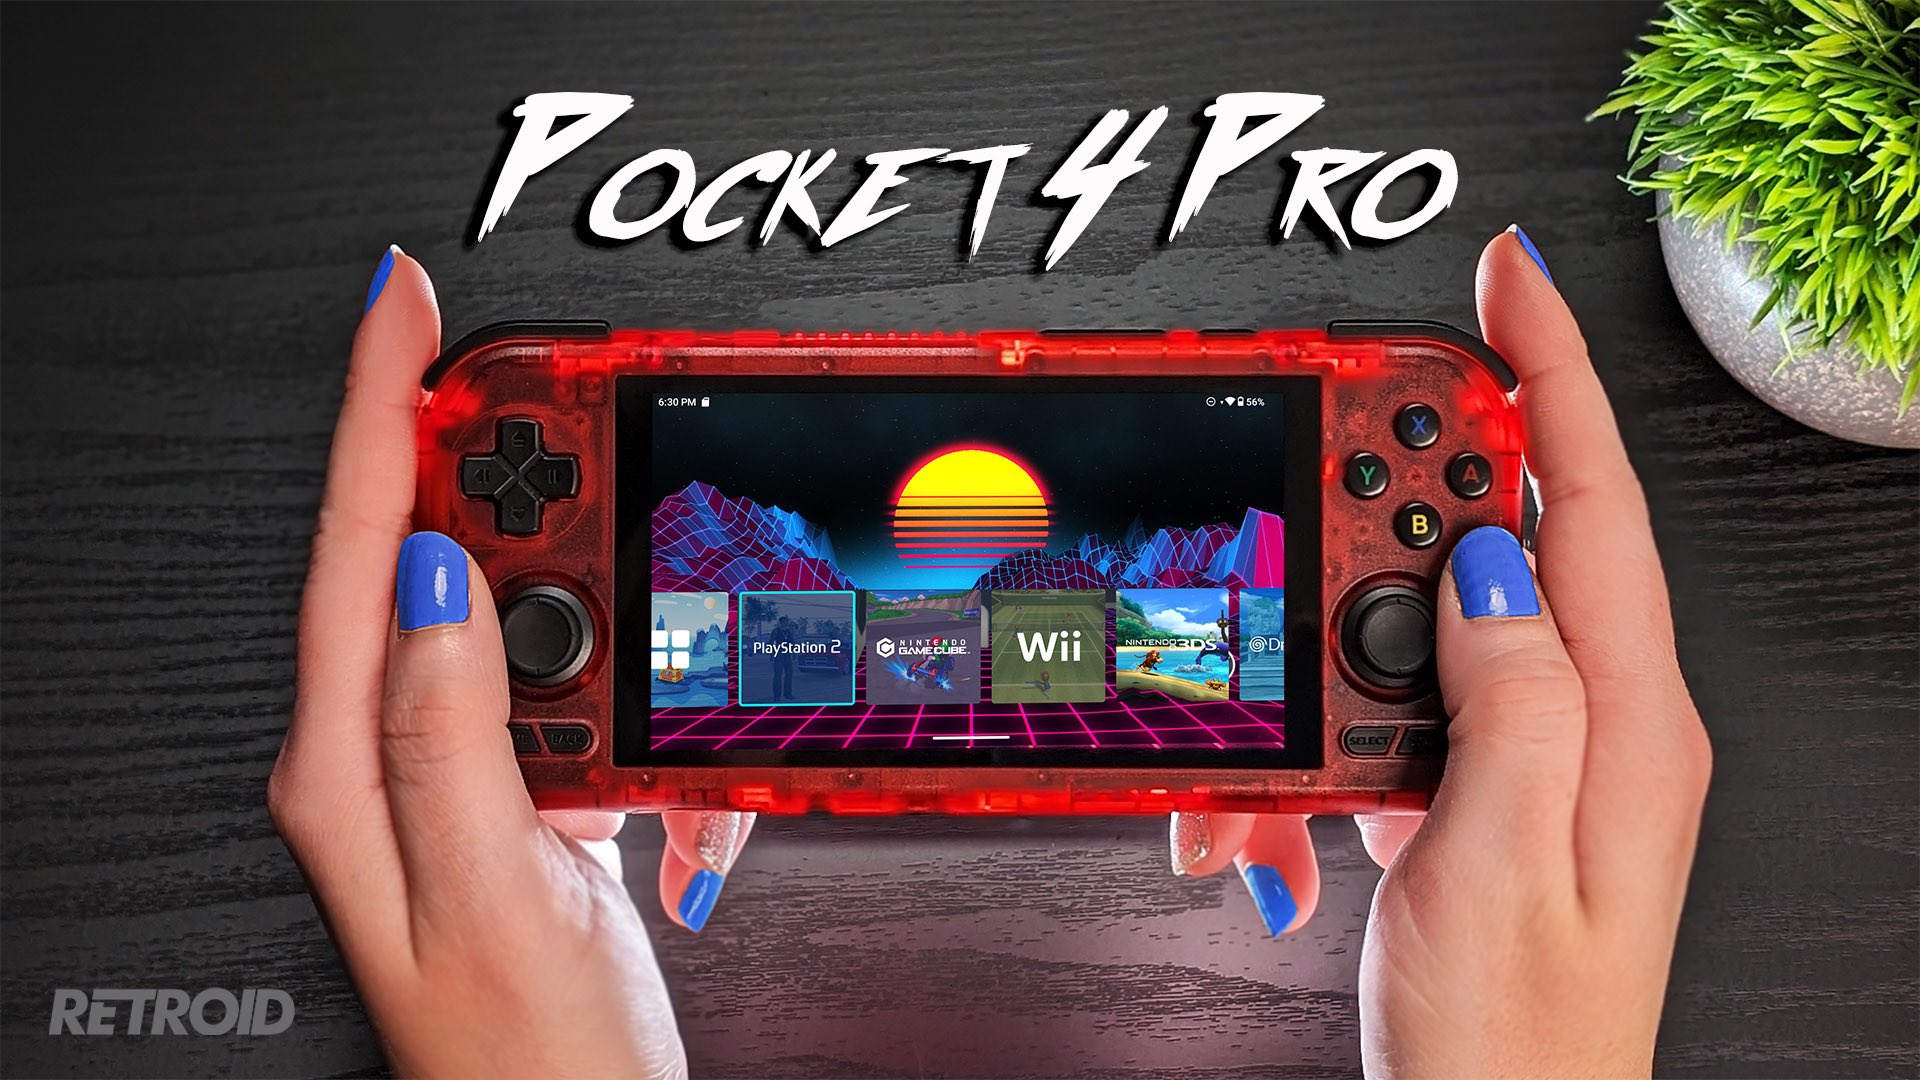 Etaprime on X: Retroid Pocket 4 Pro Hands On Review, The BEST